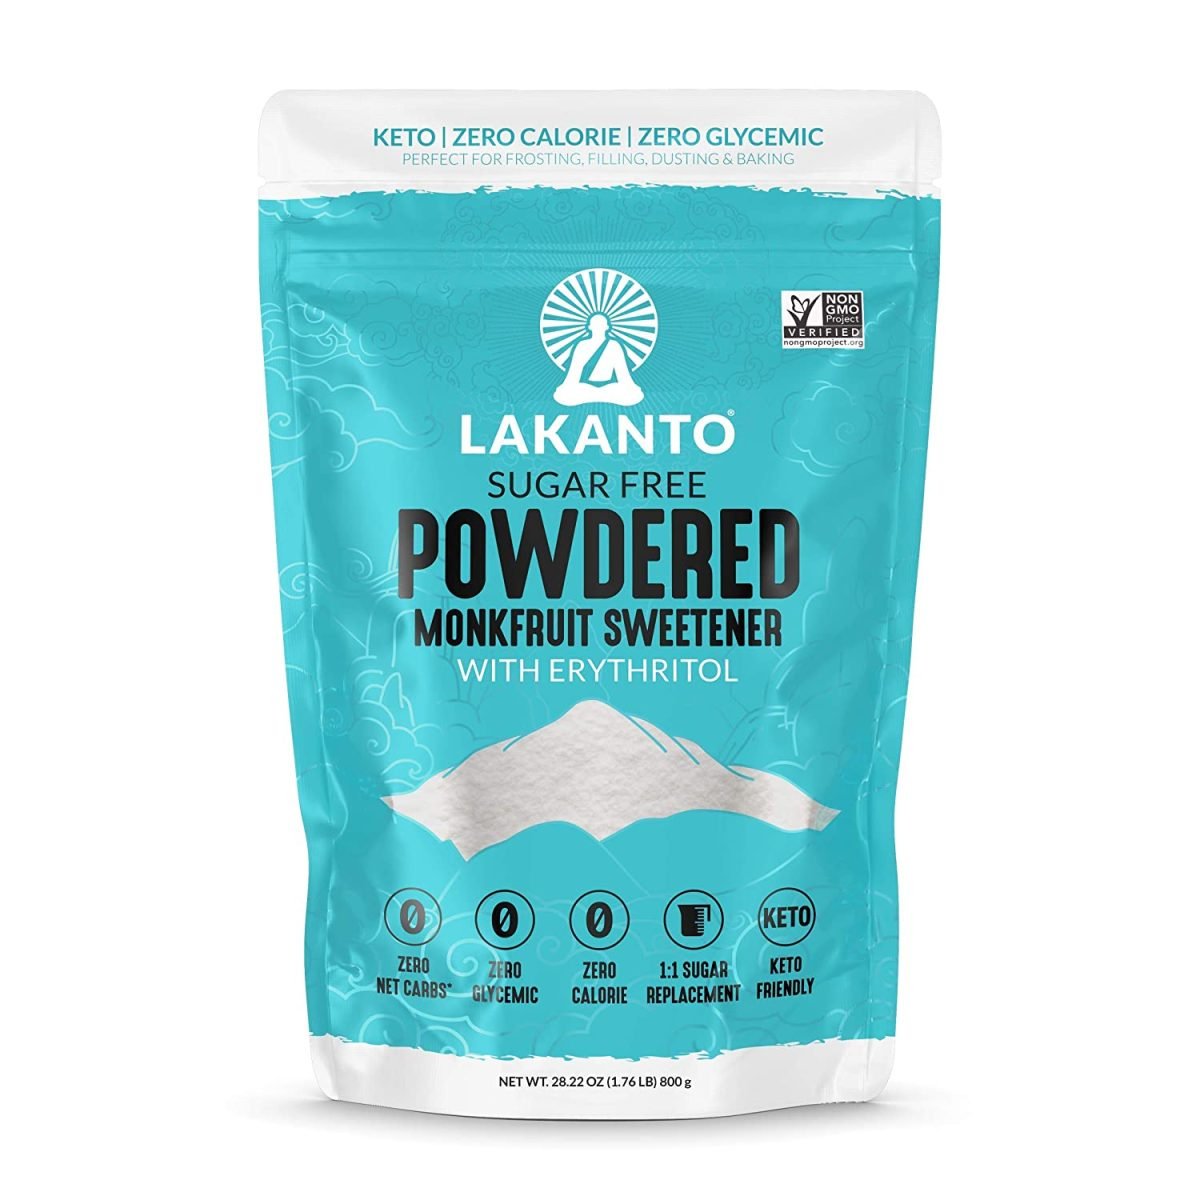 Lakanto Monkfruit Powdered Sweetener : Save 15% with promo code: POUND15